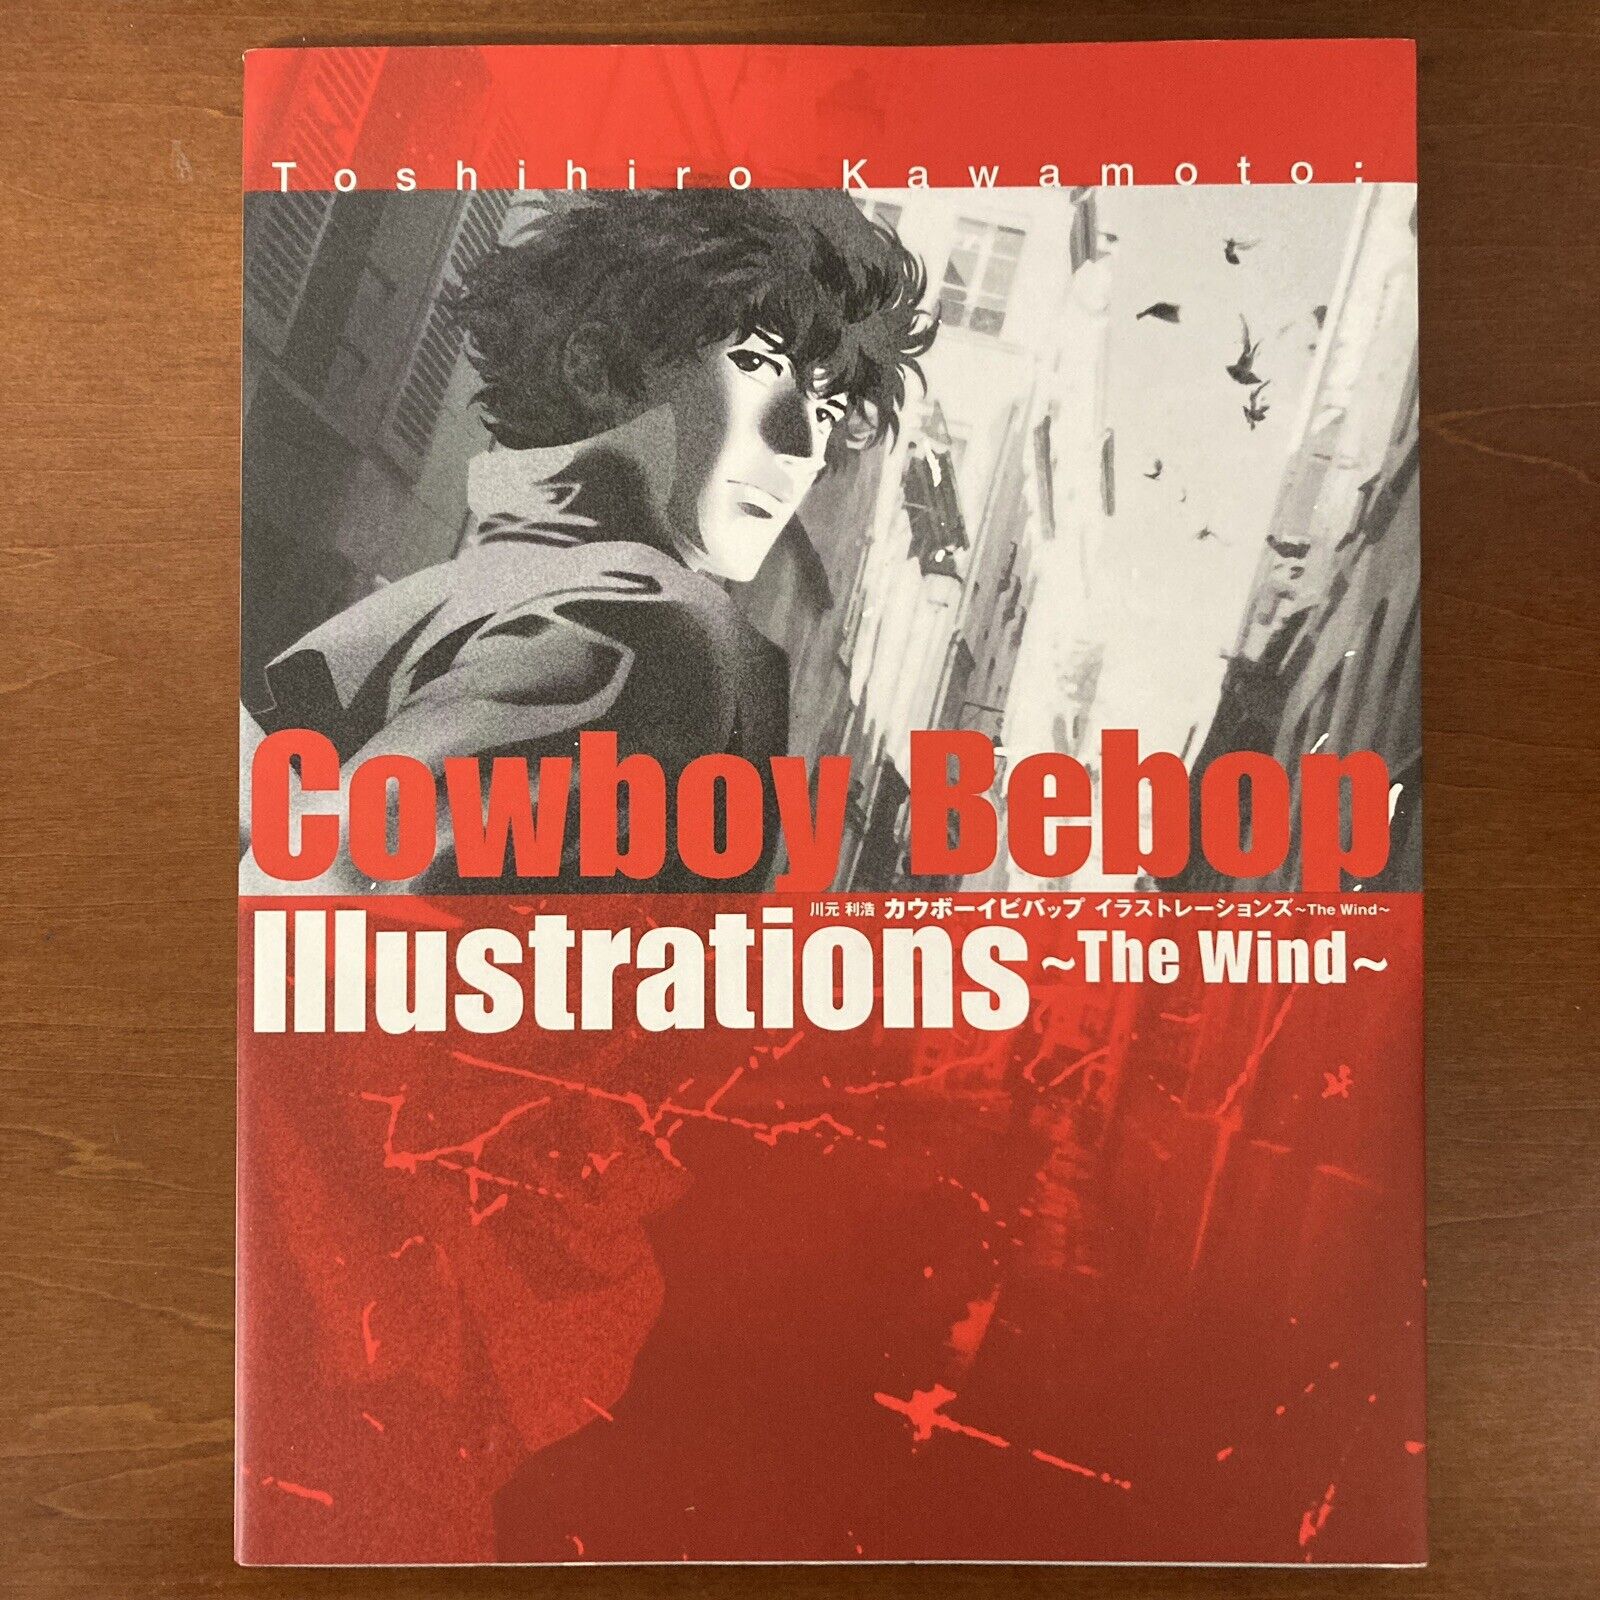 Cowboy Bebop Illustrations The Wind TOSHIHIRO KAWAMOTO Art Book Illustration